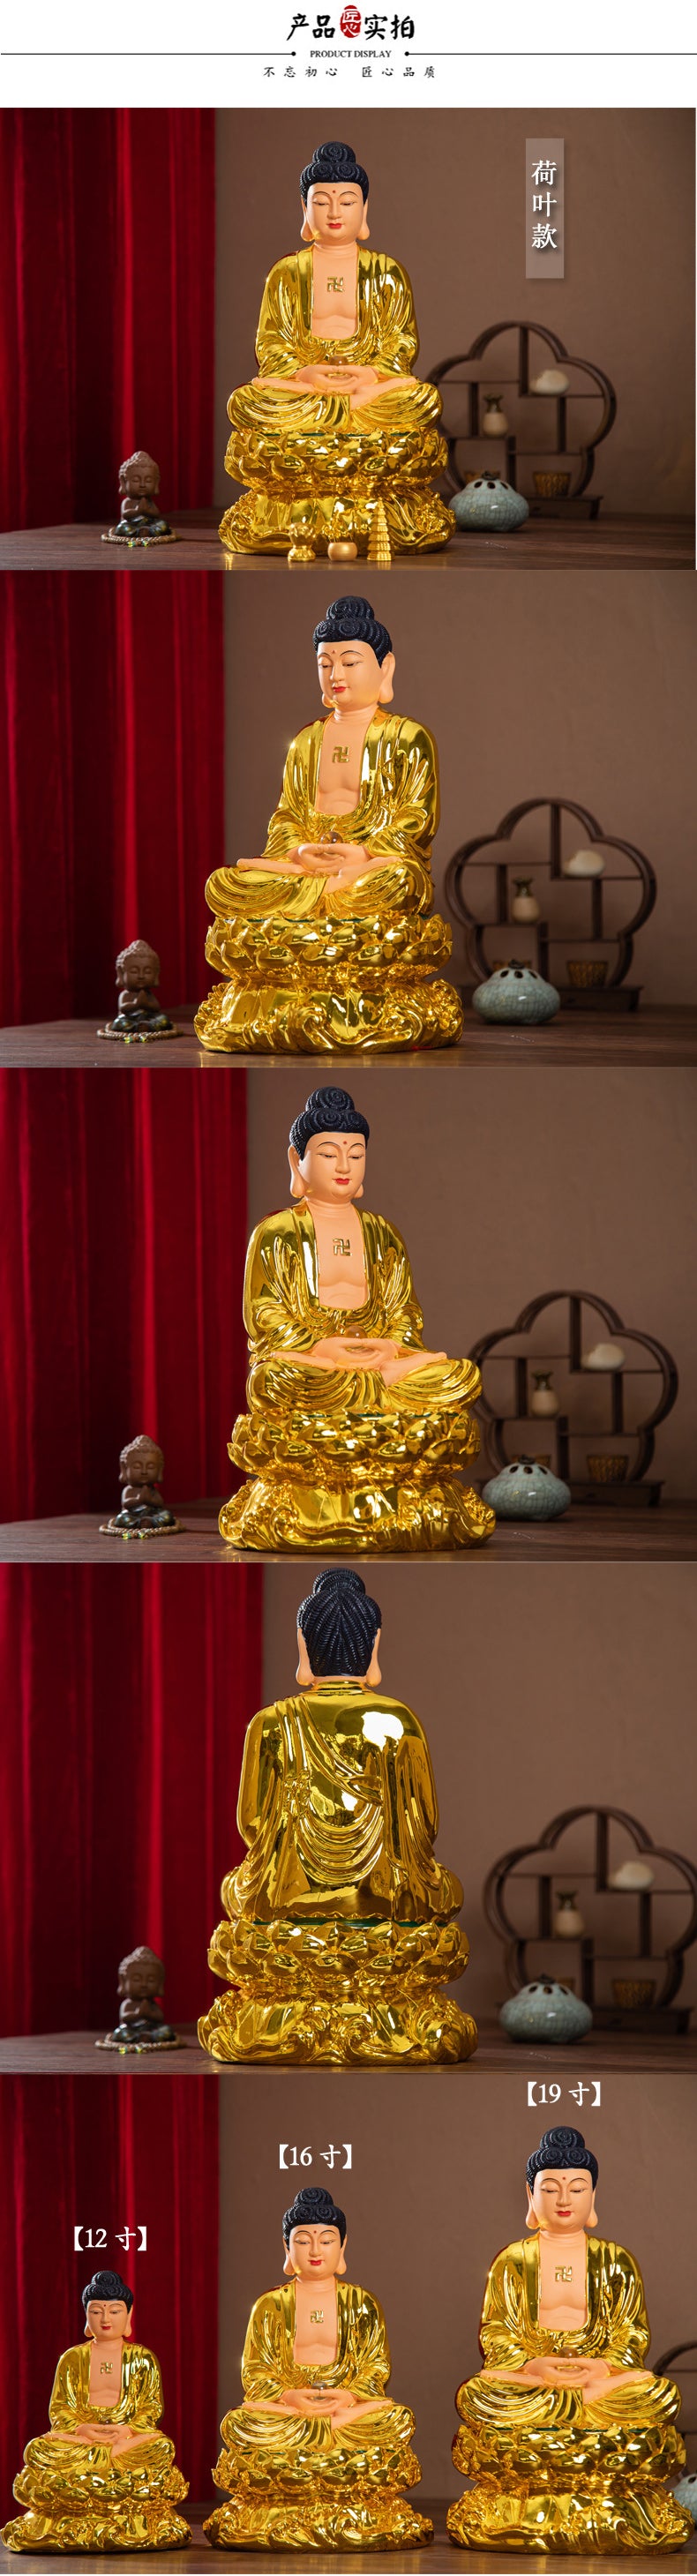 Siddhartha Gautama, Shakyamuni Buddha Statue for Sale, Lotus Leaf, Golden Resin Material, Offerings product details description introduction-3